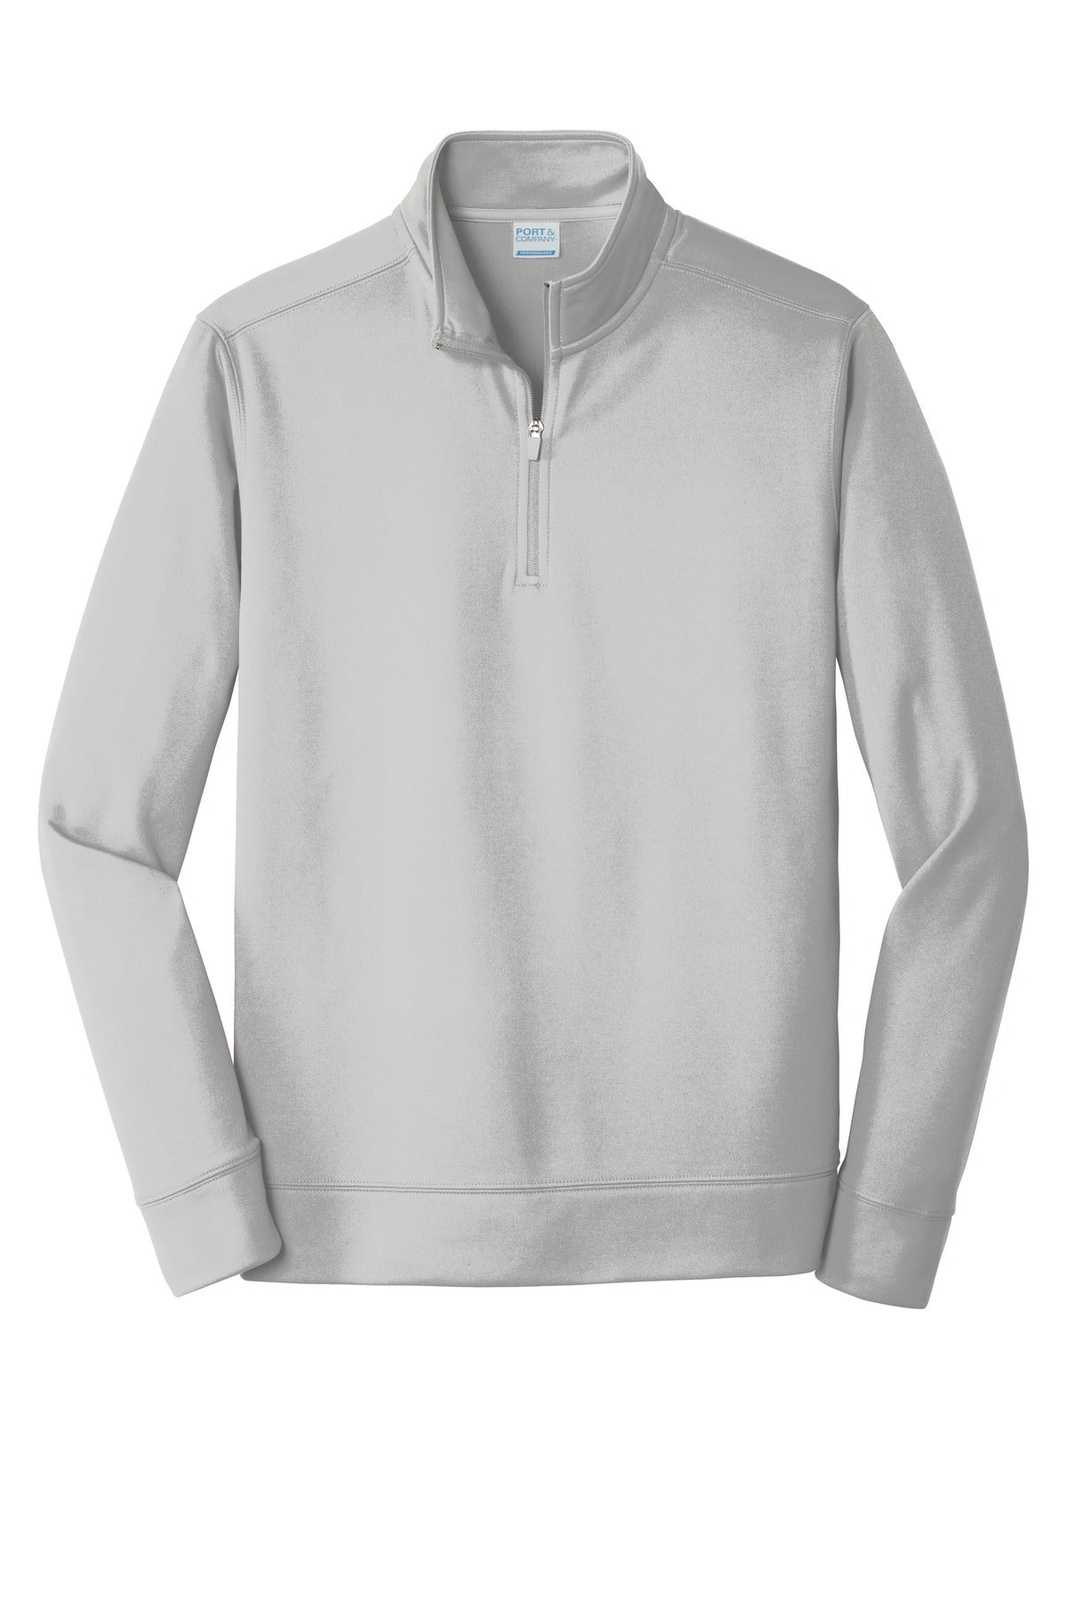 Port &amp; Company PC590Q Fleece 1/4-Zip Pullover Sweatshirt - Silver - HIT a Double - 5